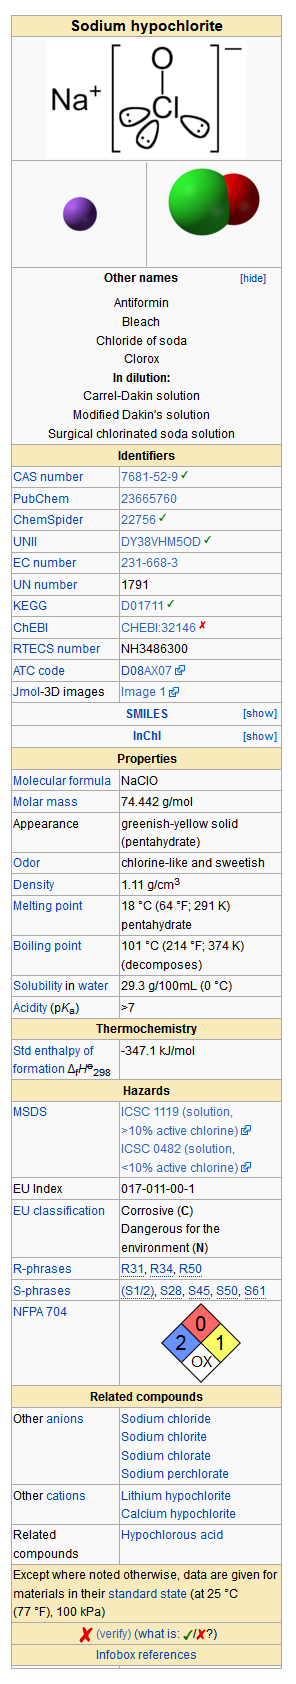 File:Sodium hypochlorite wiki.png